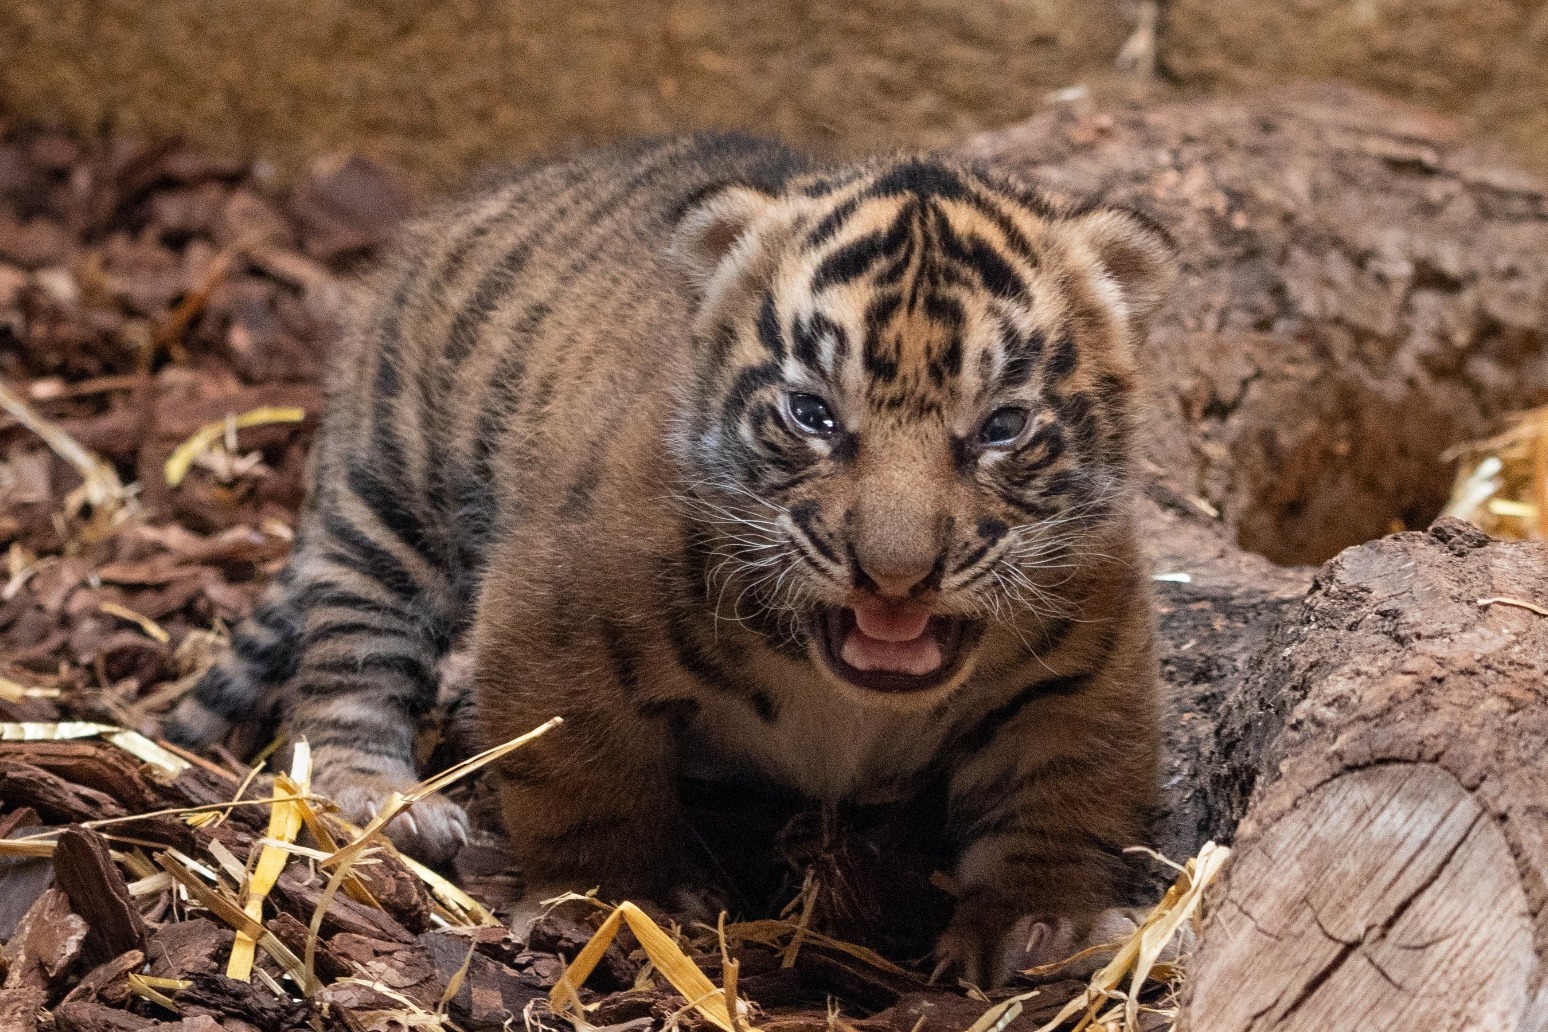 London Zoo visitors get first glimpse of endangered Sumatran tiger cubs 